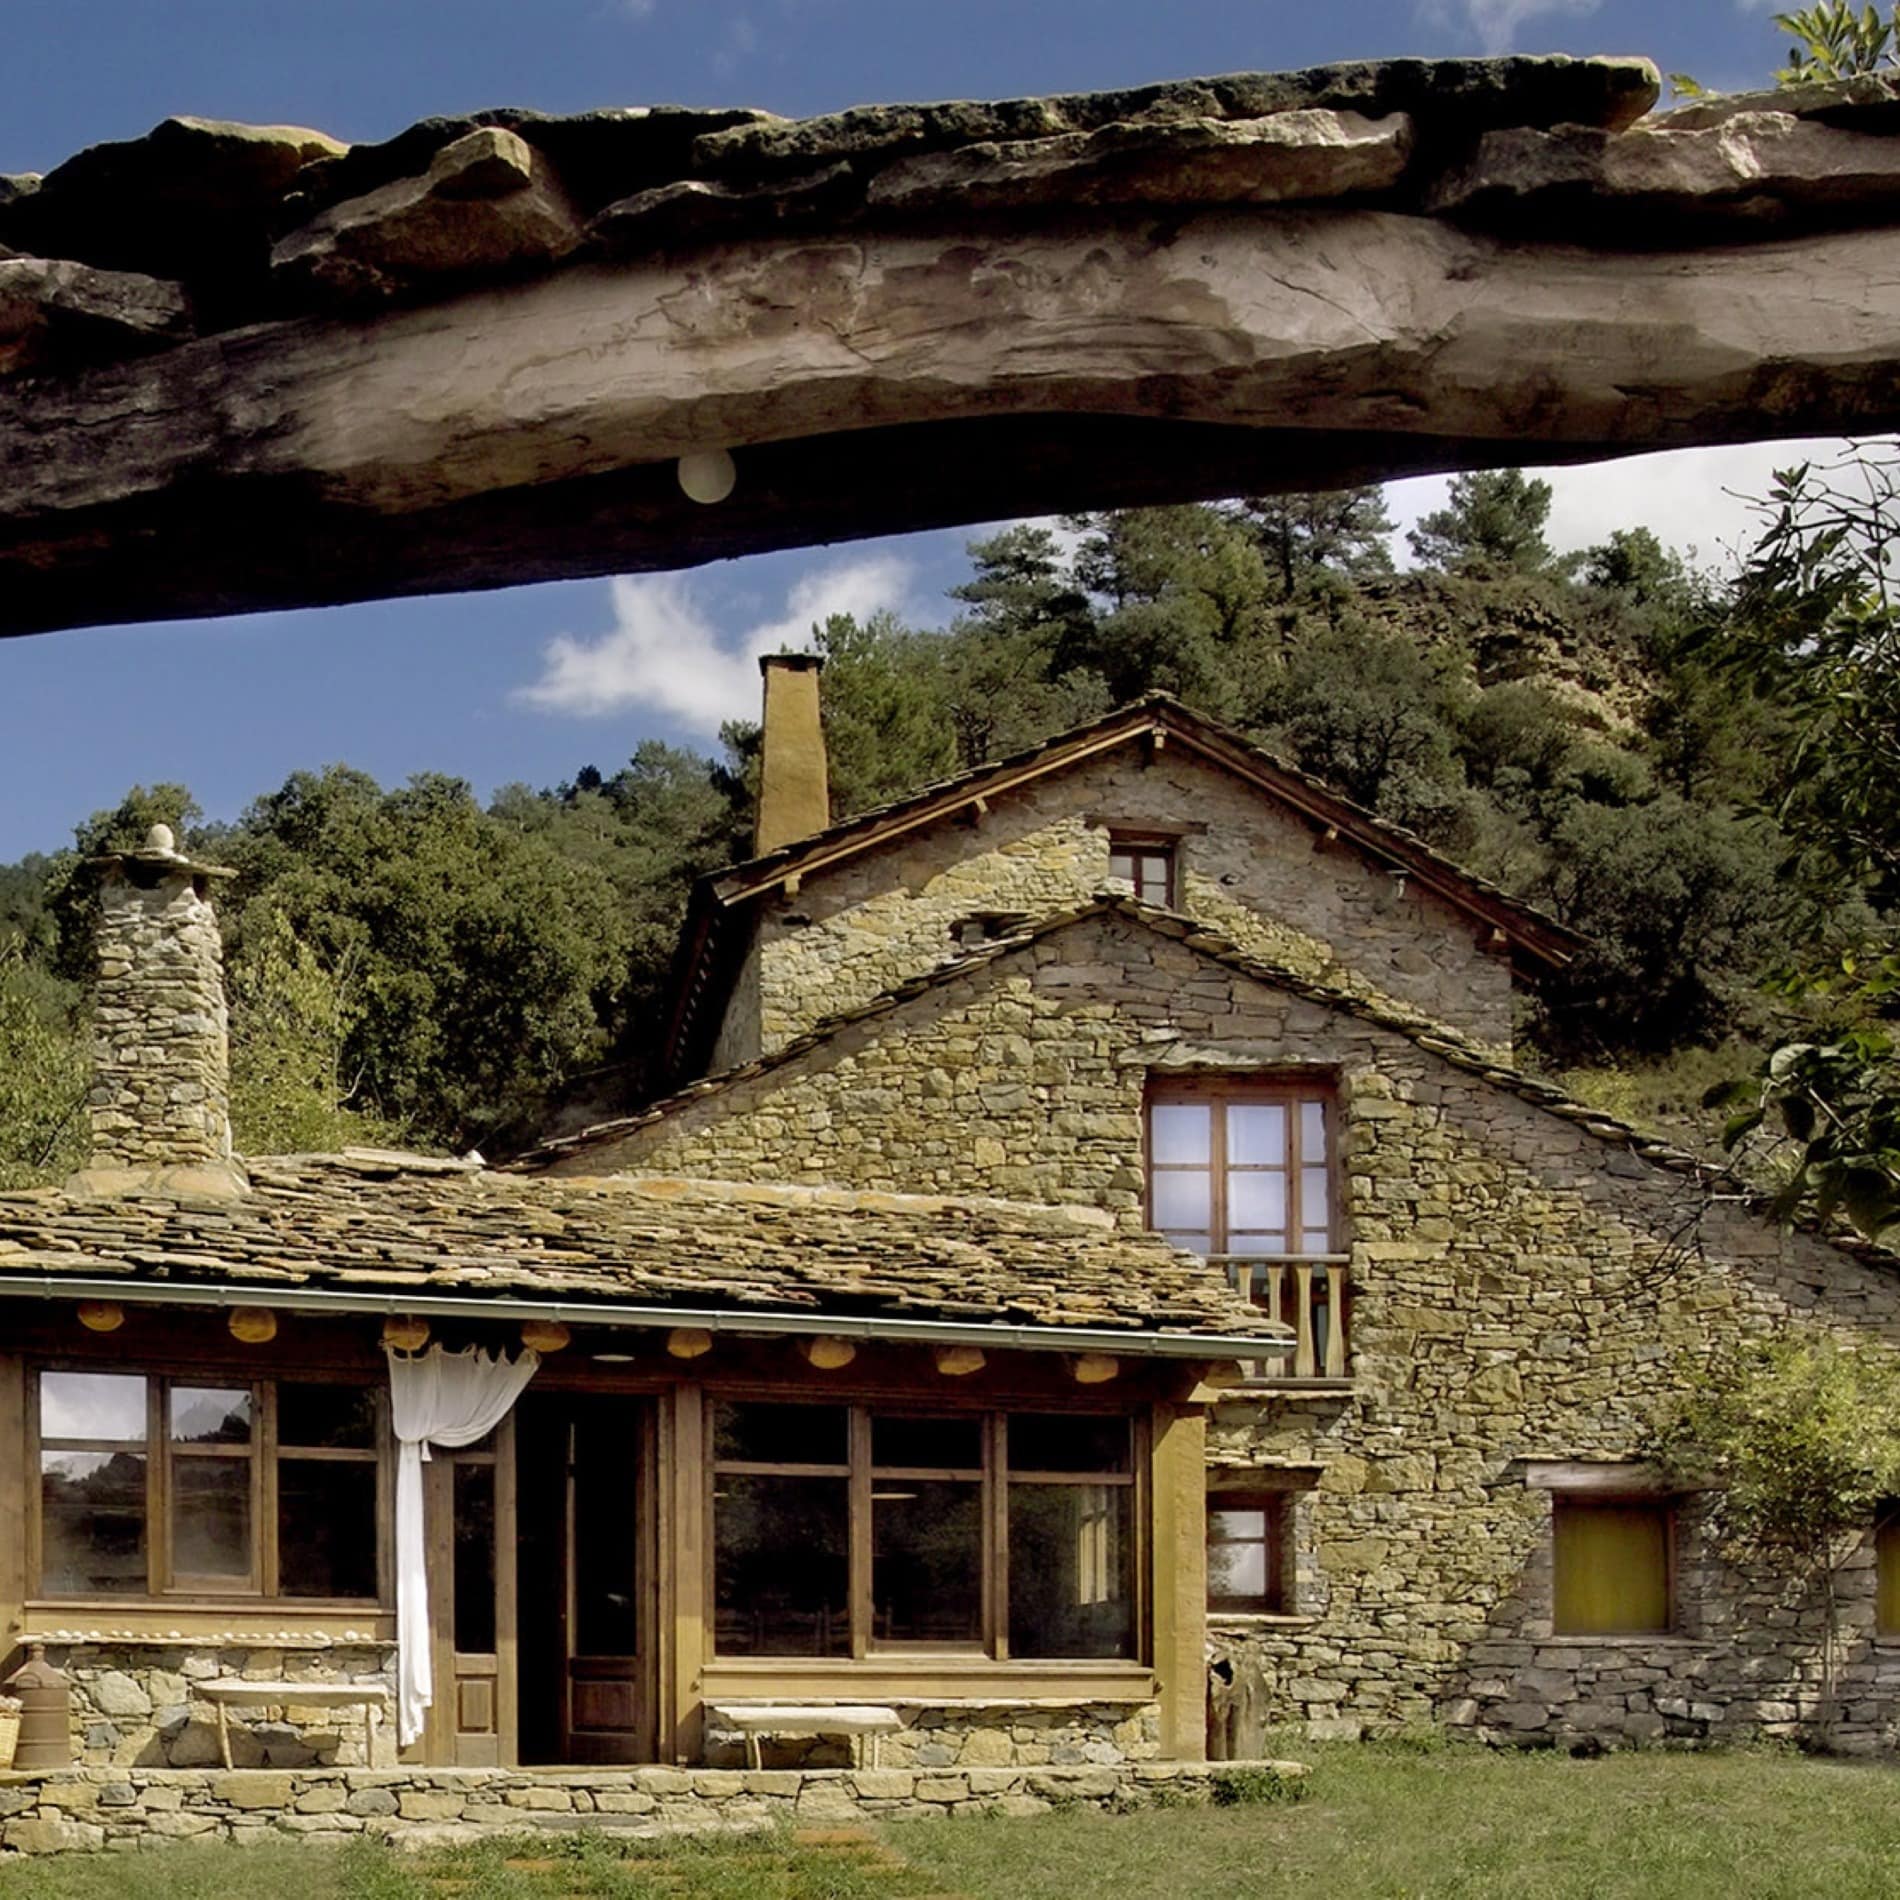 Espectacular casa rural de piedra situada en un entorno montañoso inigualable